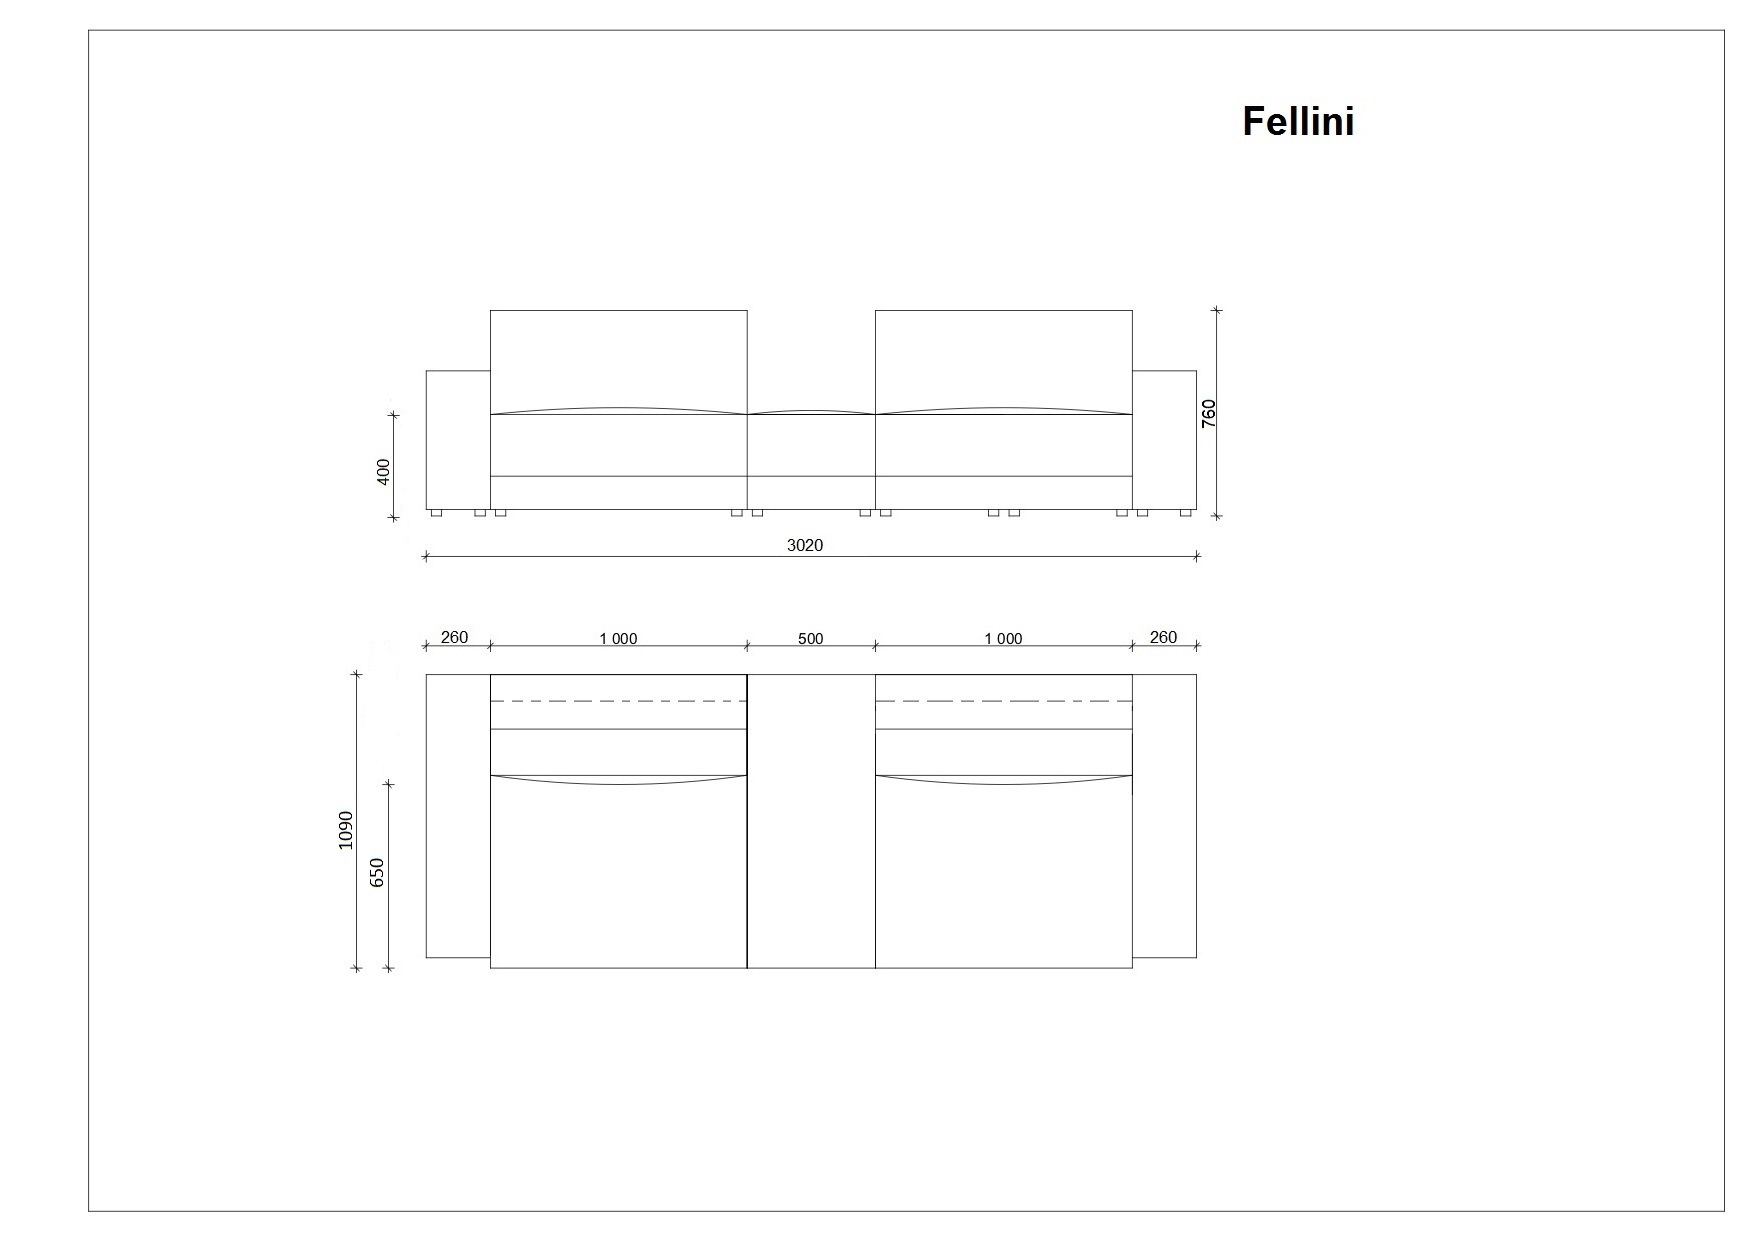 Detalles técnicos Fellini 1